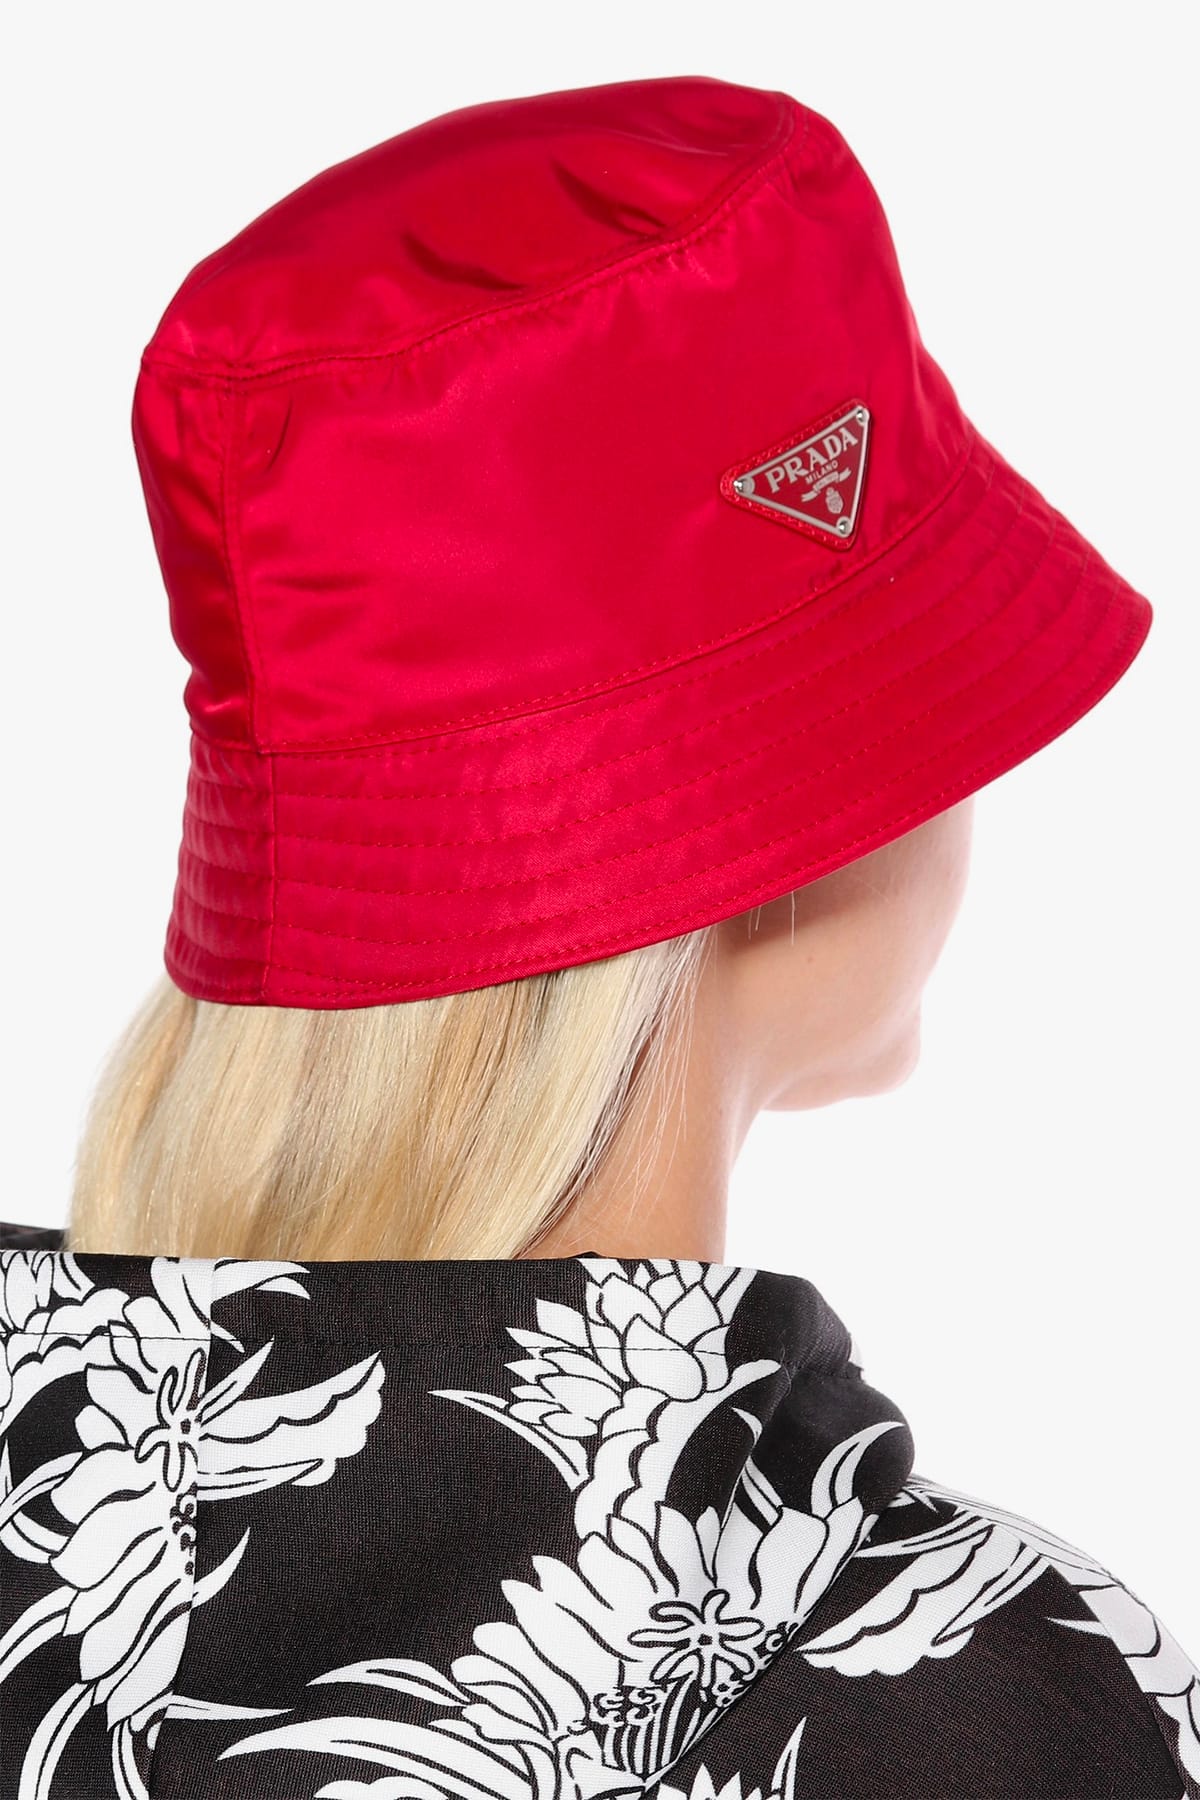 Shop Prada's Red Bucket Hat on 